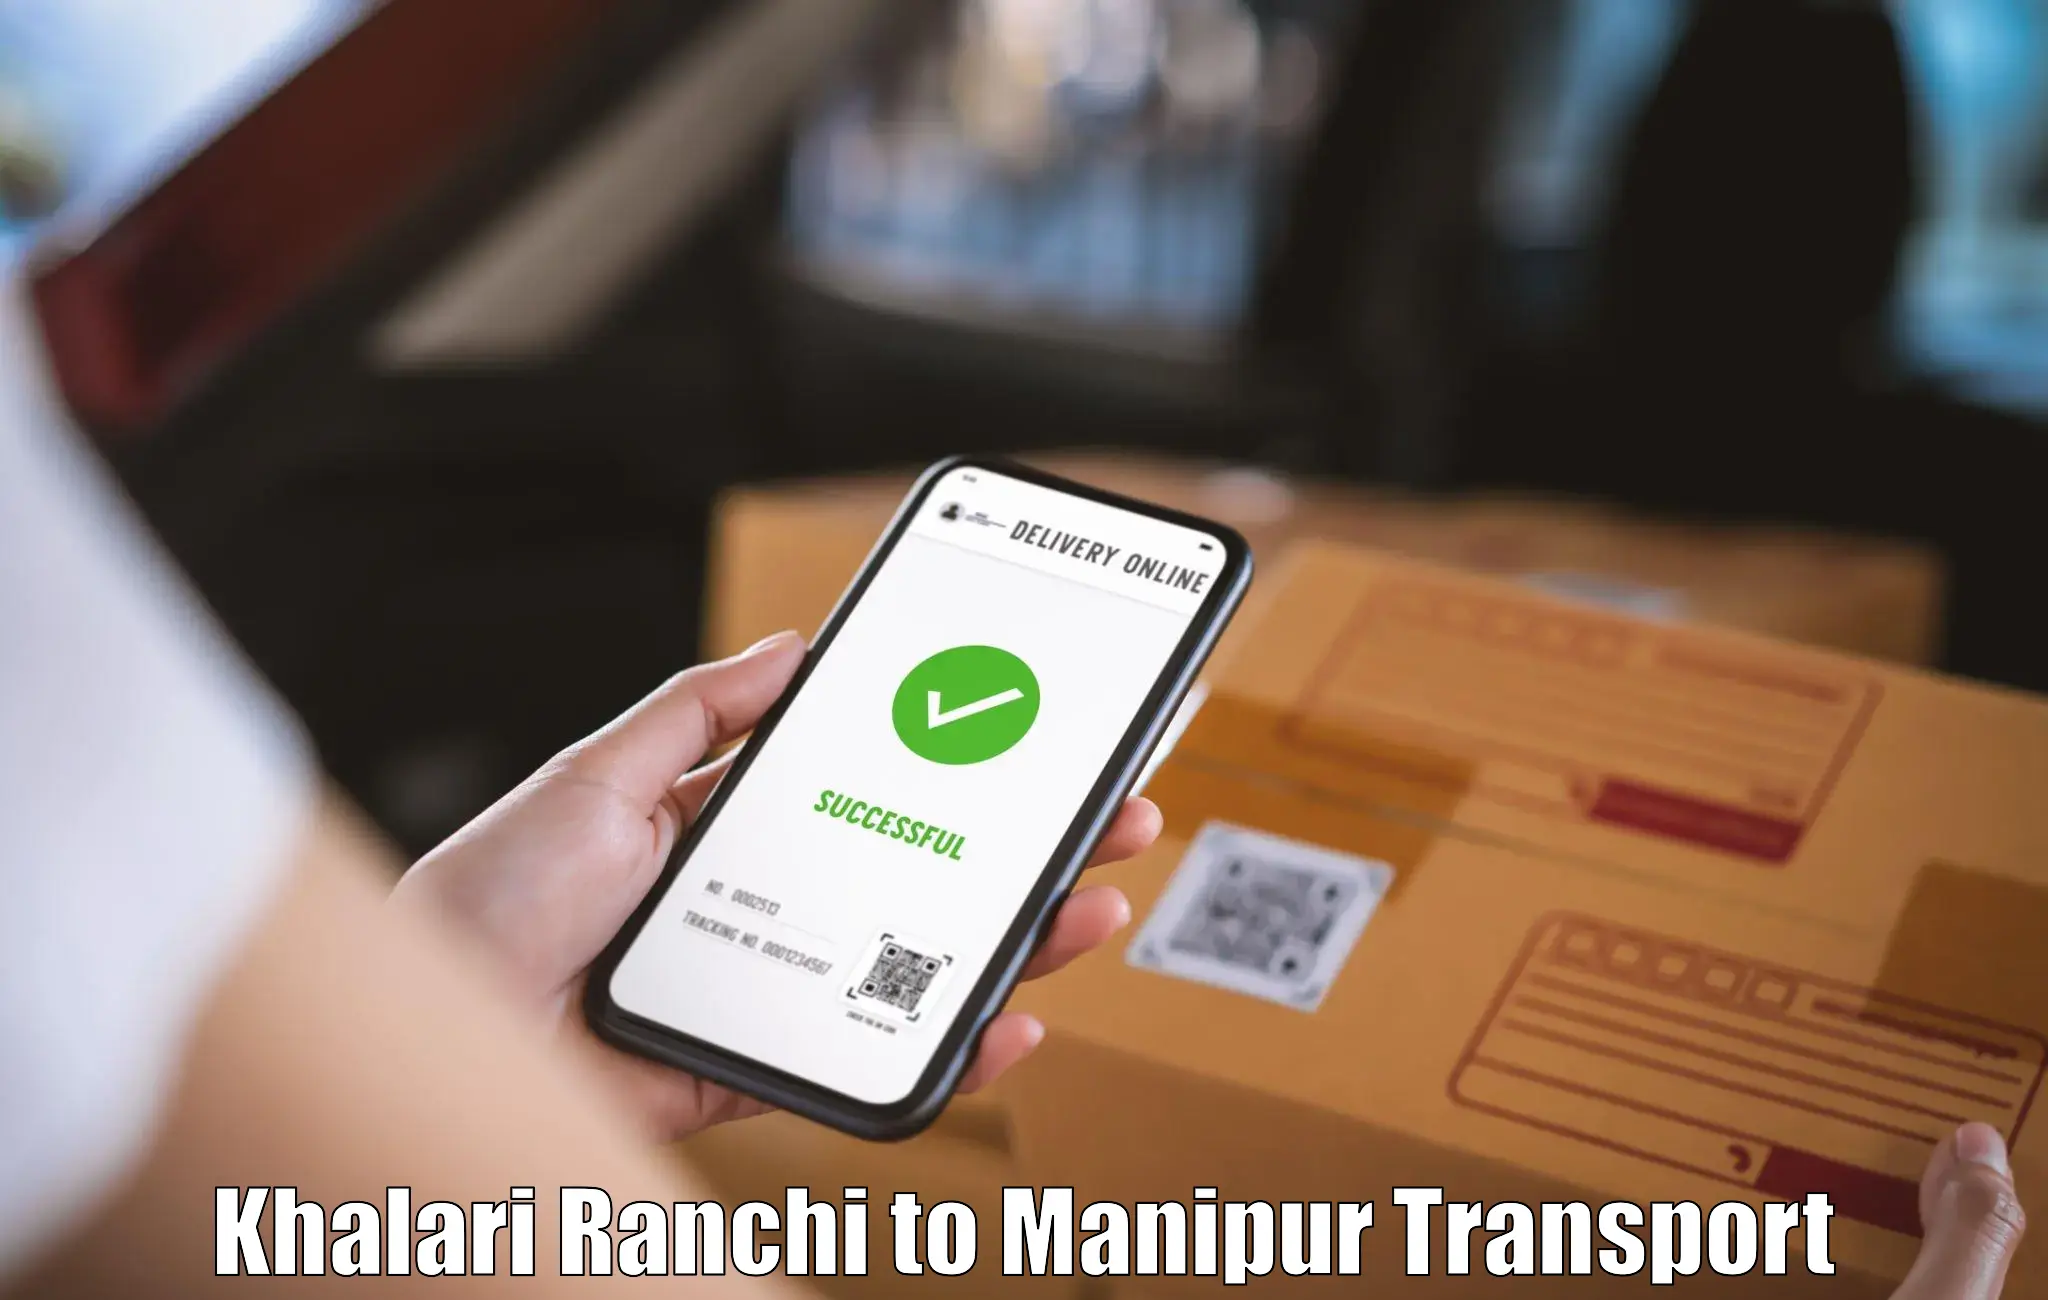 Daily transport service Khalari Ranchi to Kanti